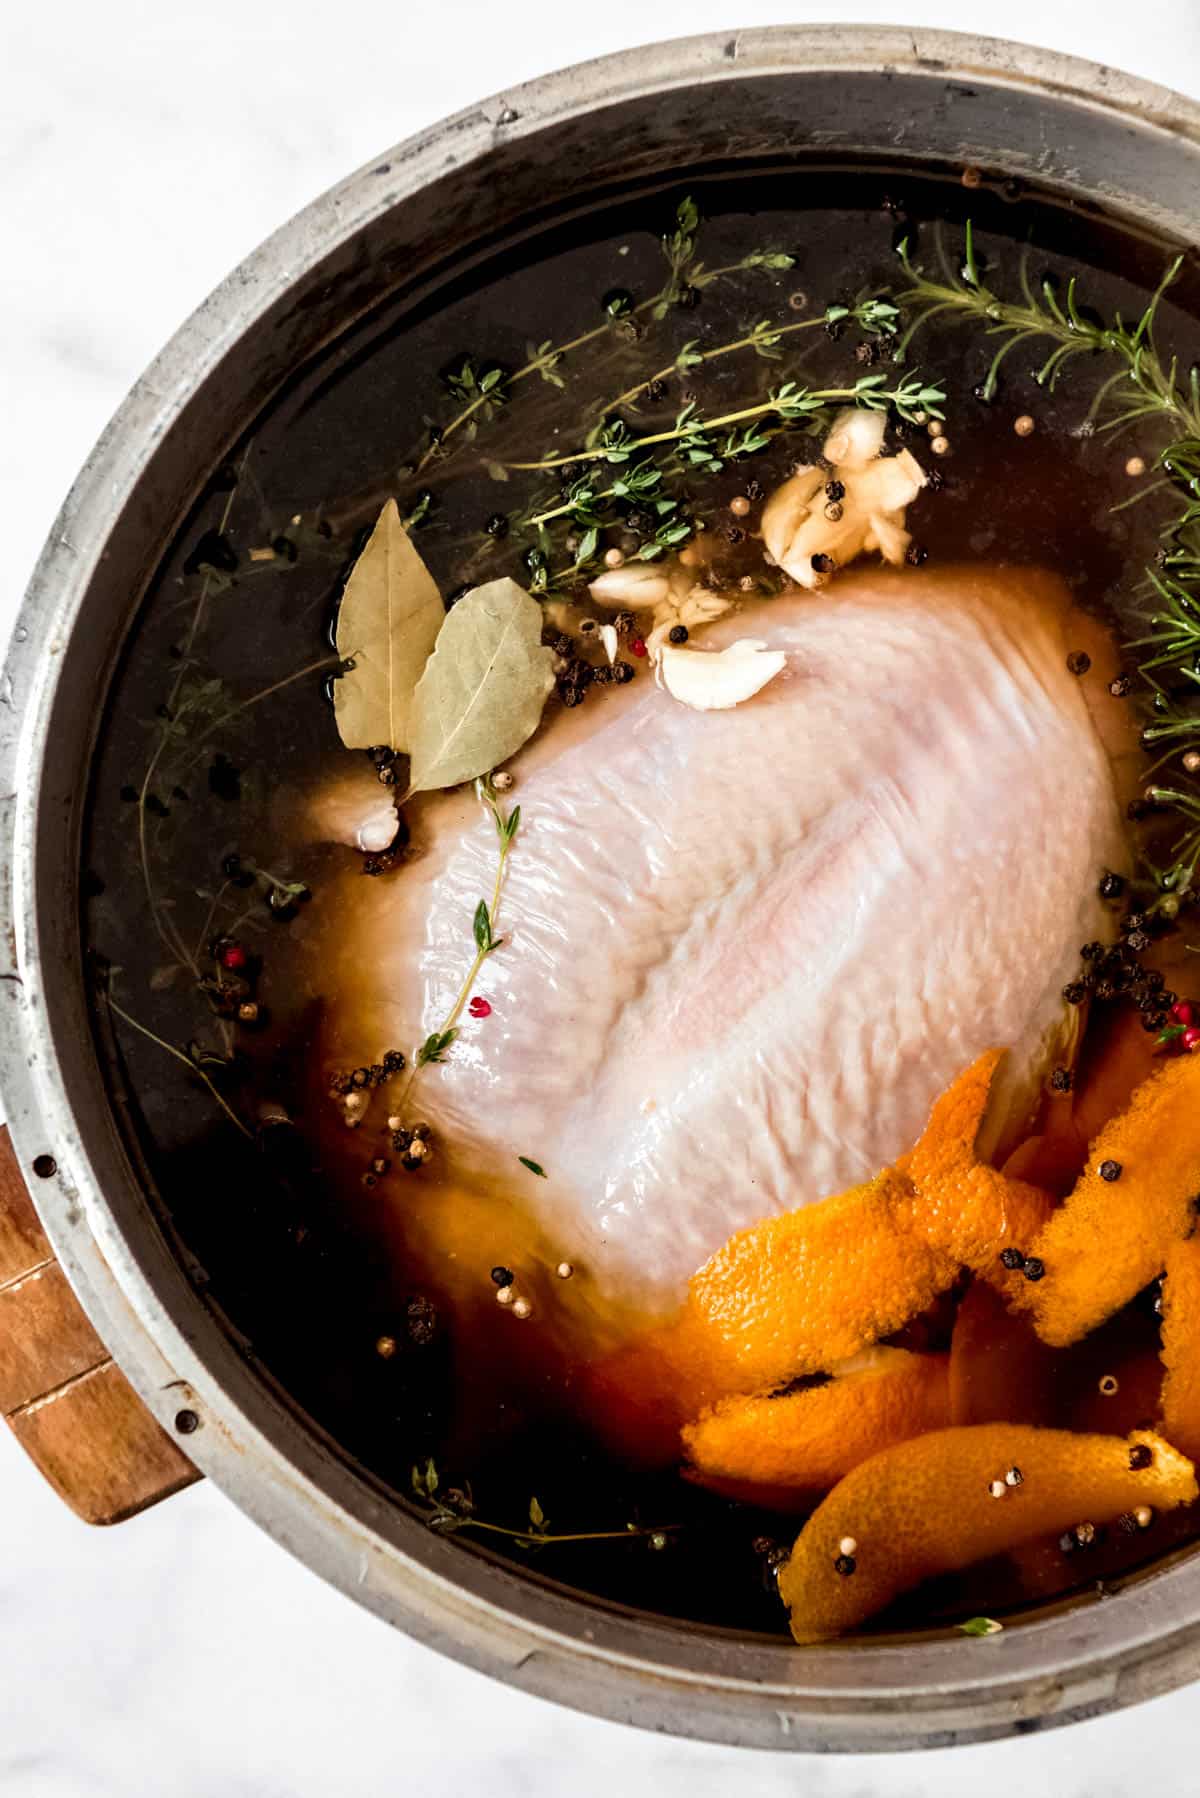 A turkey soaking in brine with herbs, orange peel, and peppercorns.